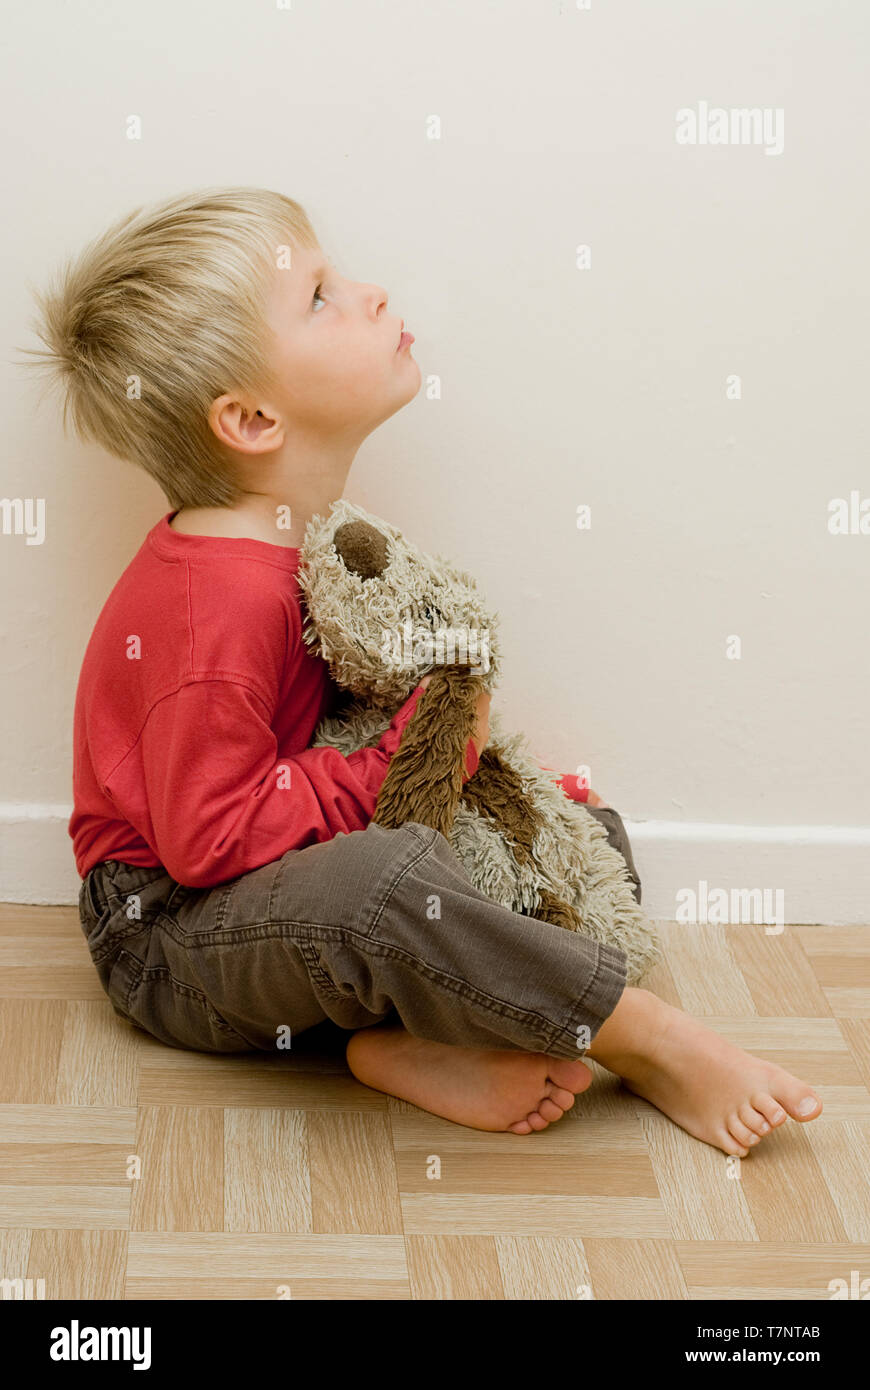 angry child looks upwards holding his toy dog. Stock Photo